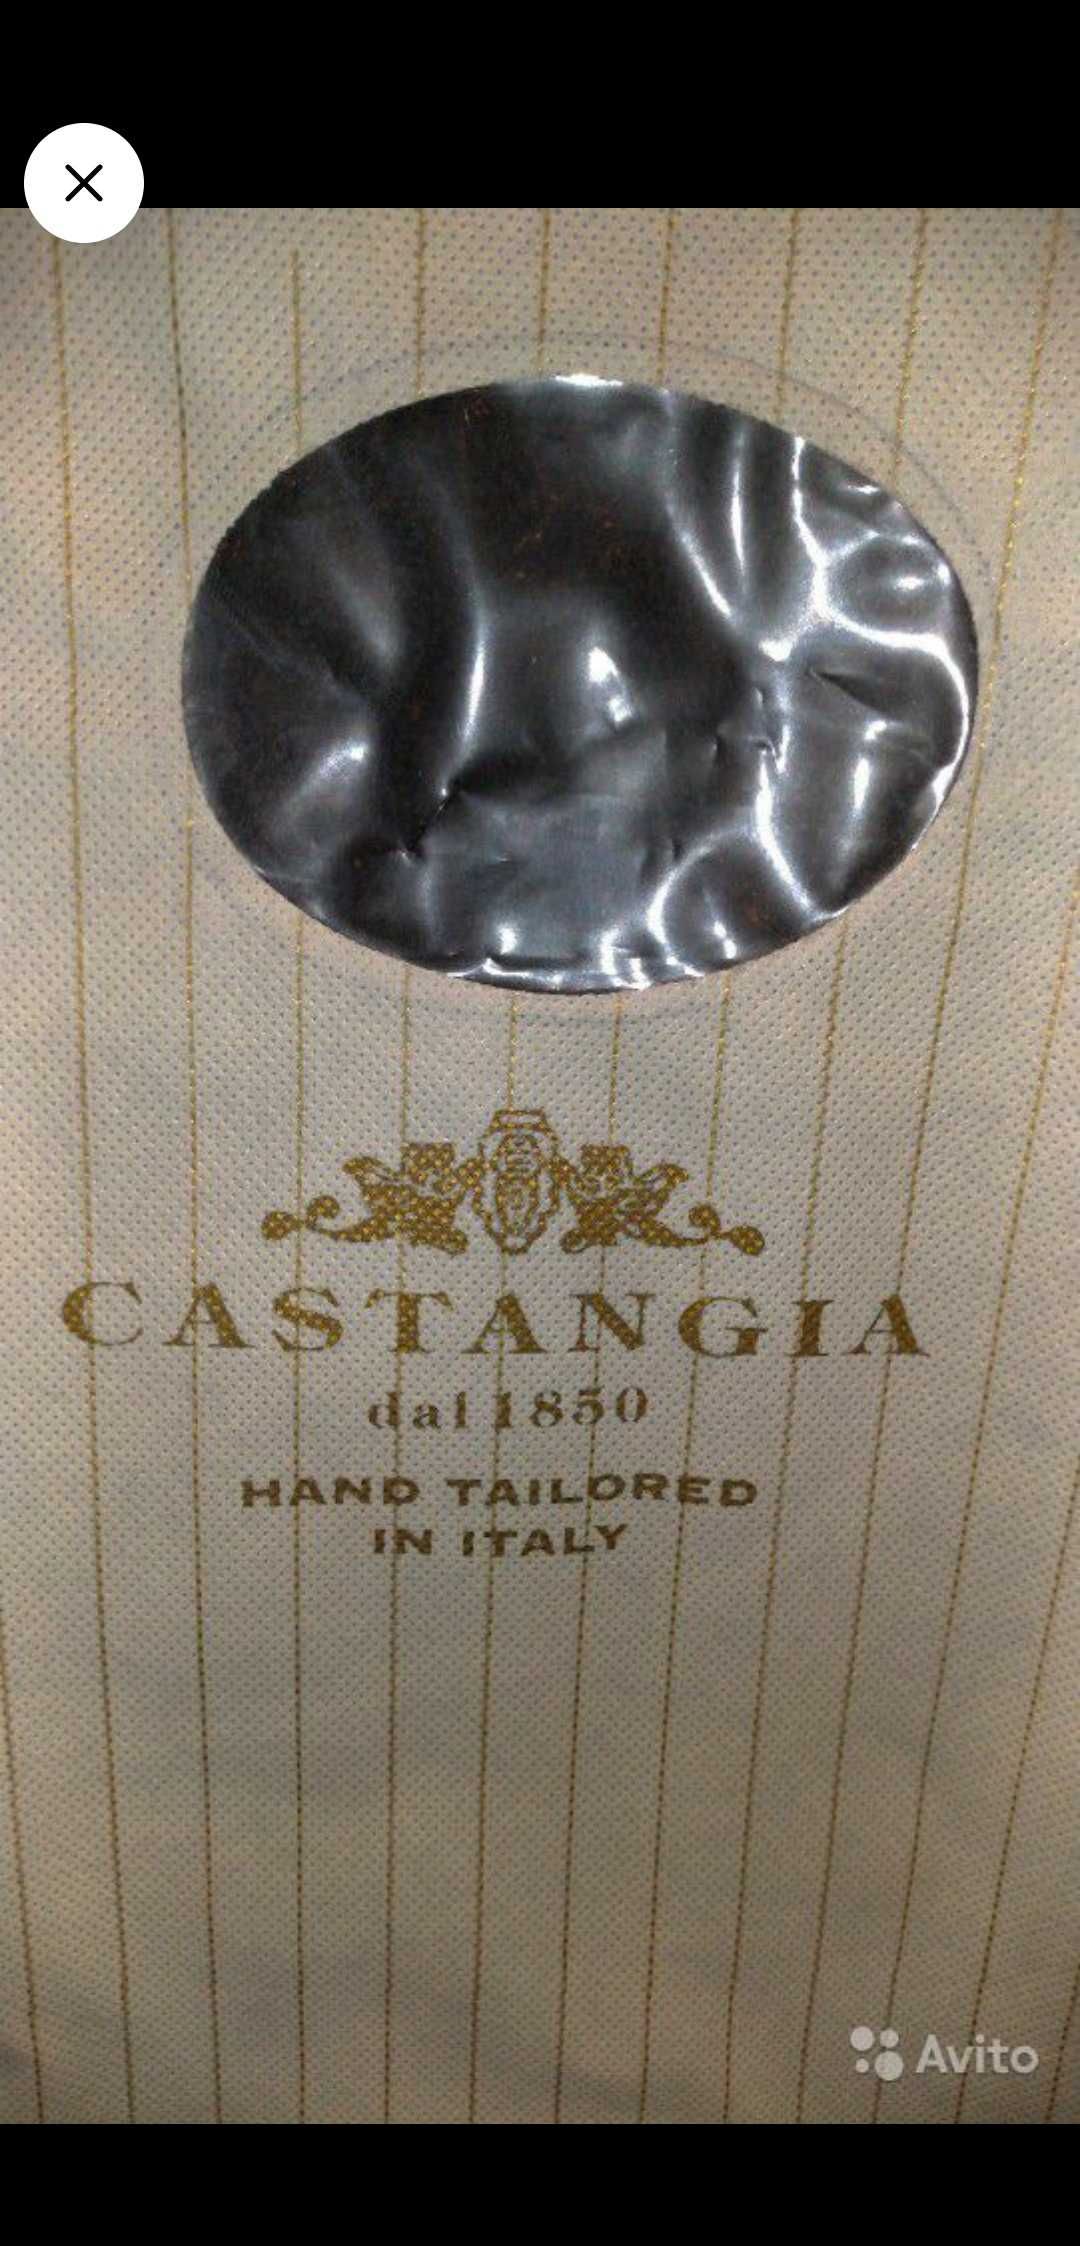 Пальто Lartoria Castangia Italy (кашемир) 50размер